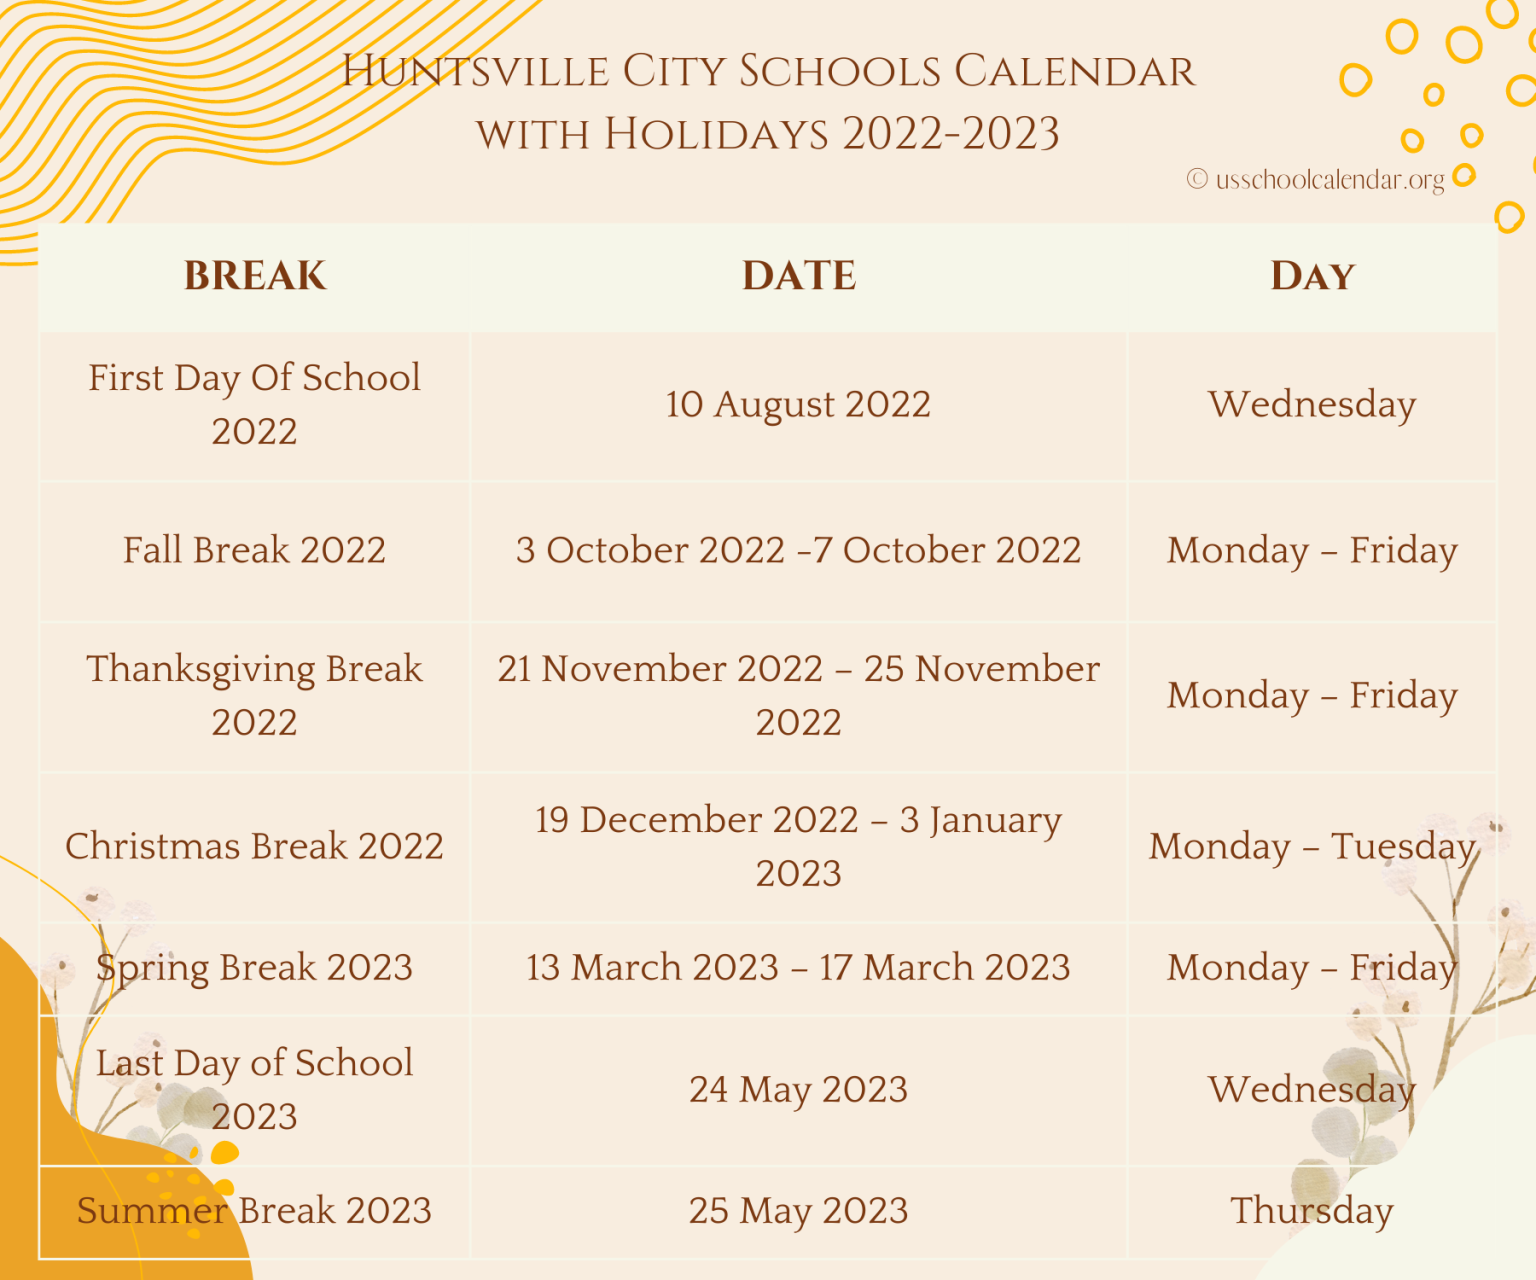 Huntsville City Schools Calendar With Holidays 2022 2023